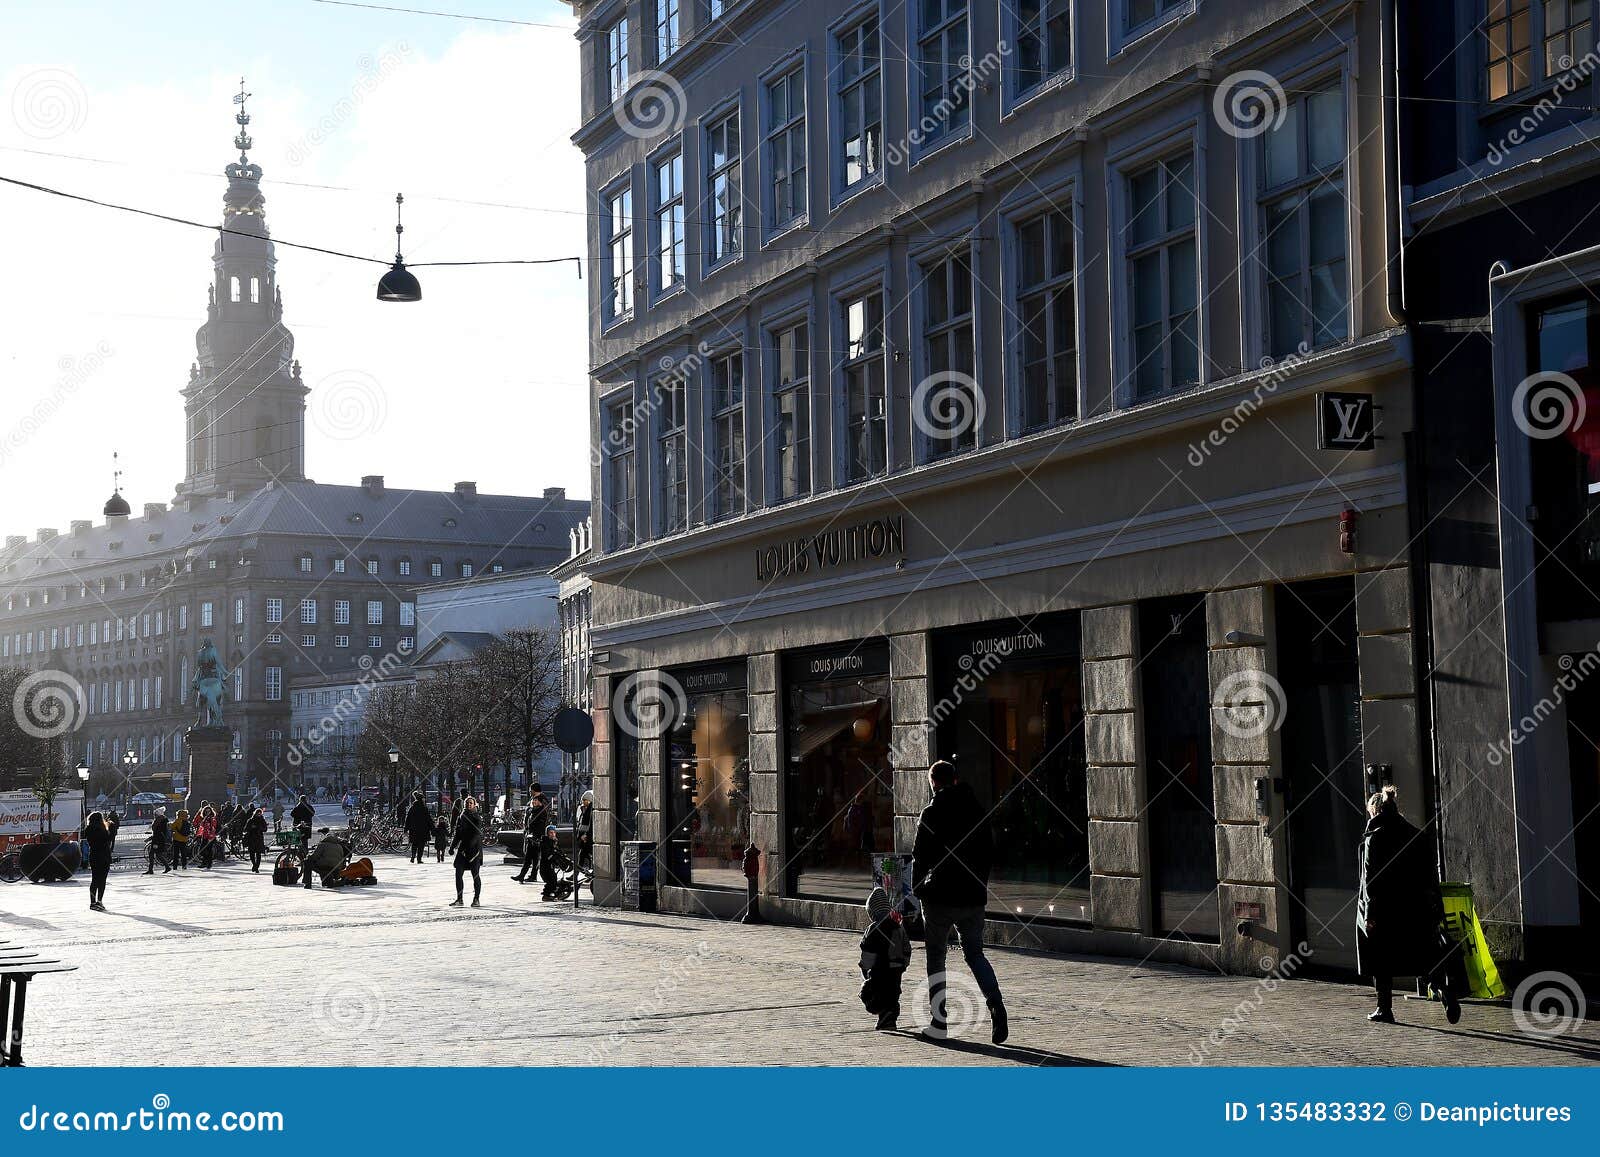 LOUIS LUXURY STORE in COPENHAGEN DENMARK Editorial Photography - Image of europa, vuitton: 135483332